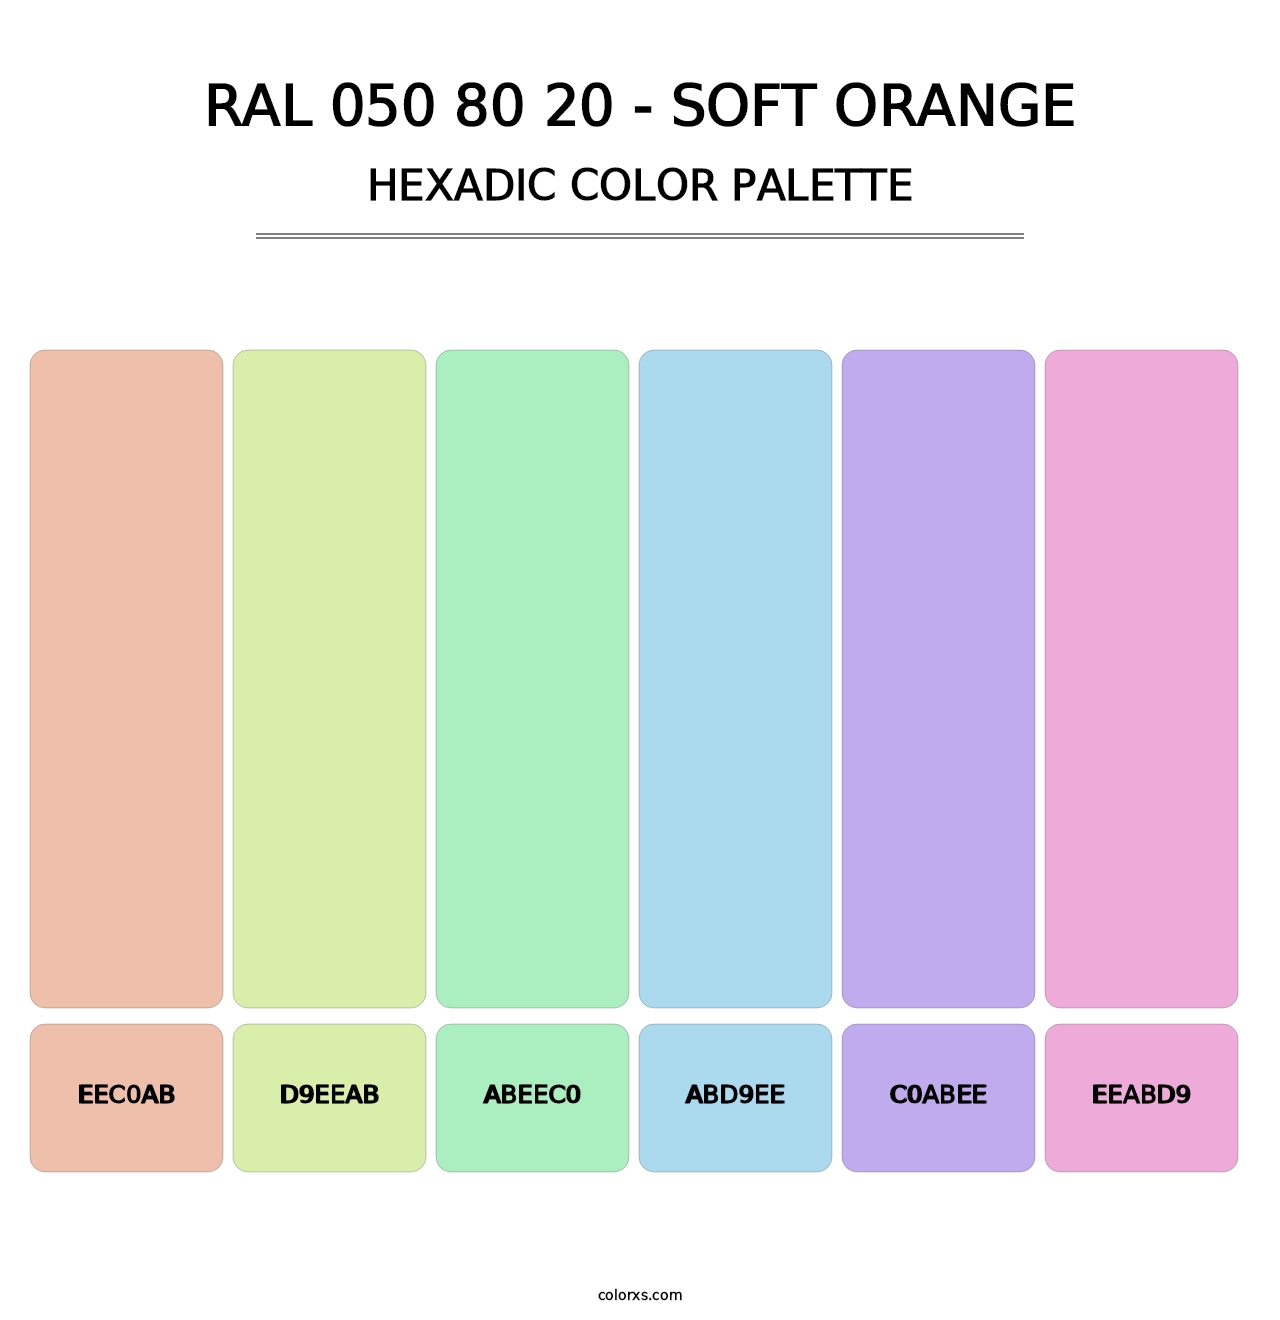 RAL 050 80 20 - Soft Orange - Hexadic Color Palette